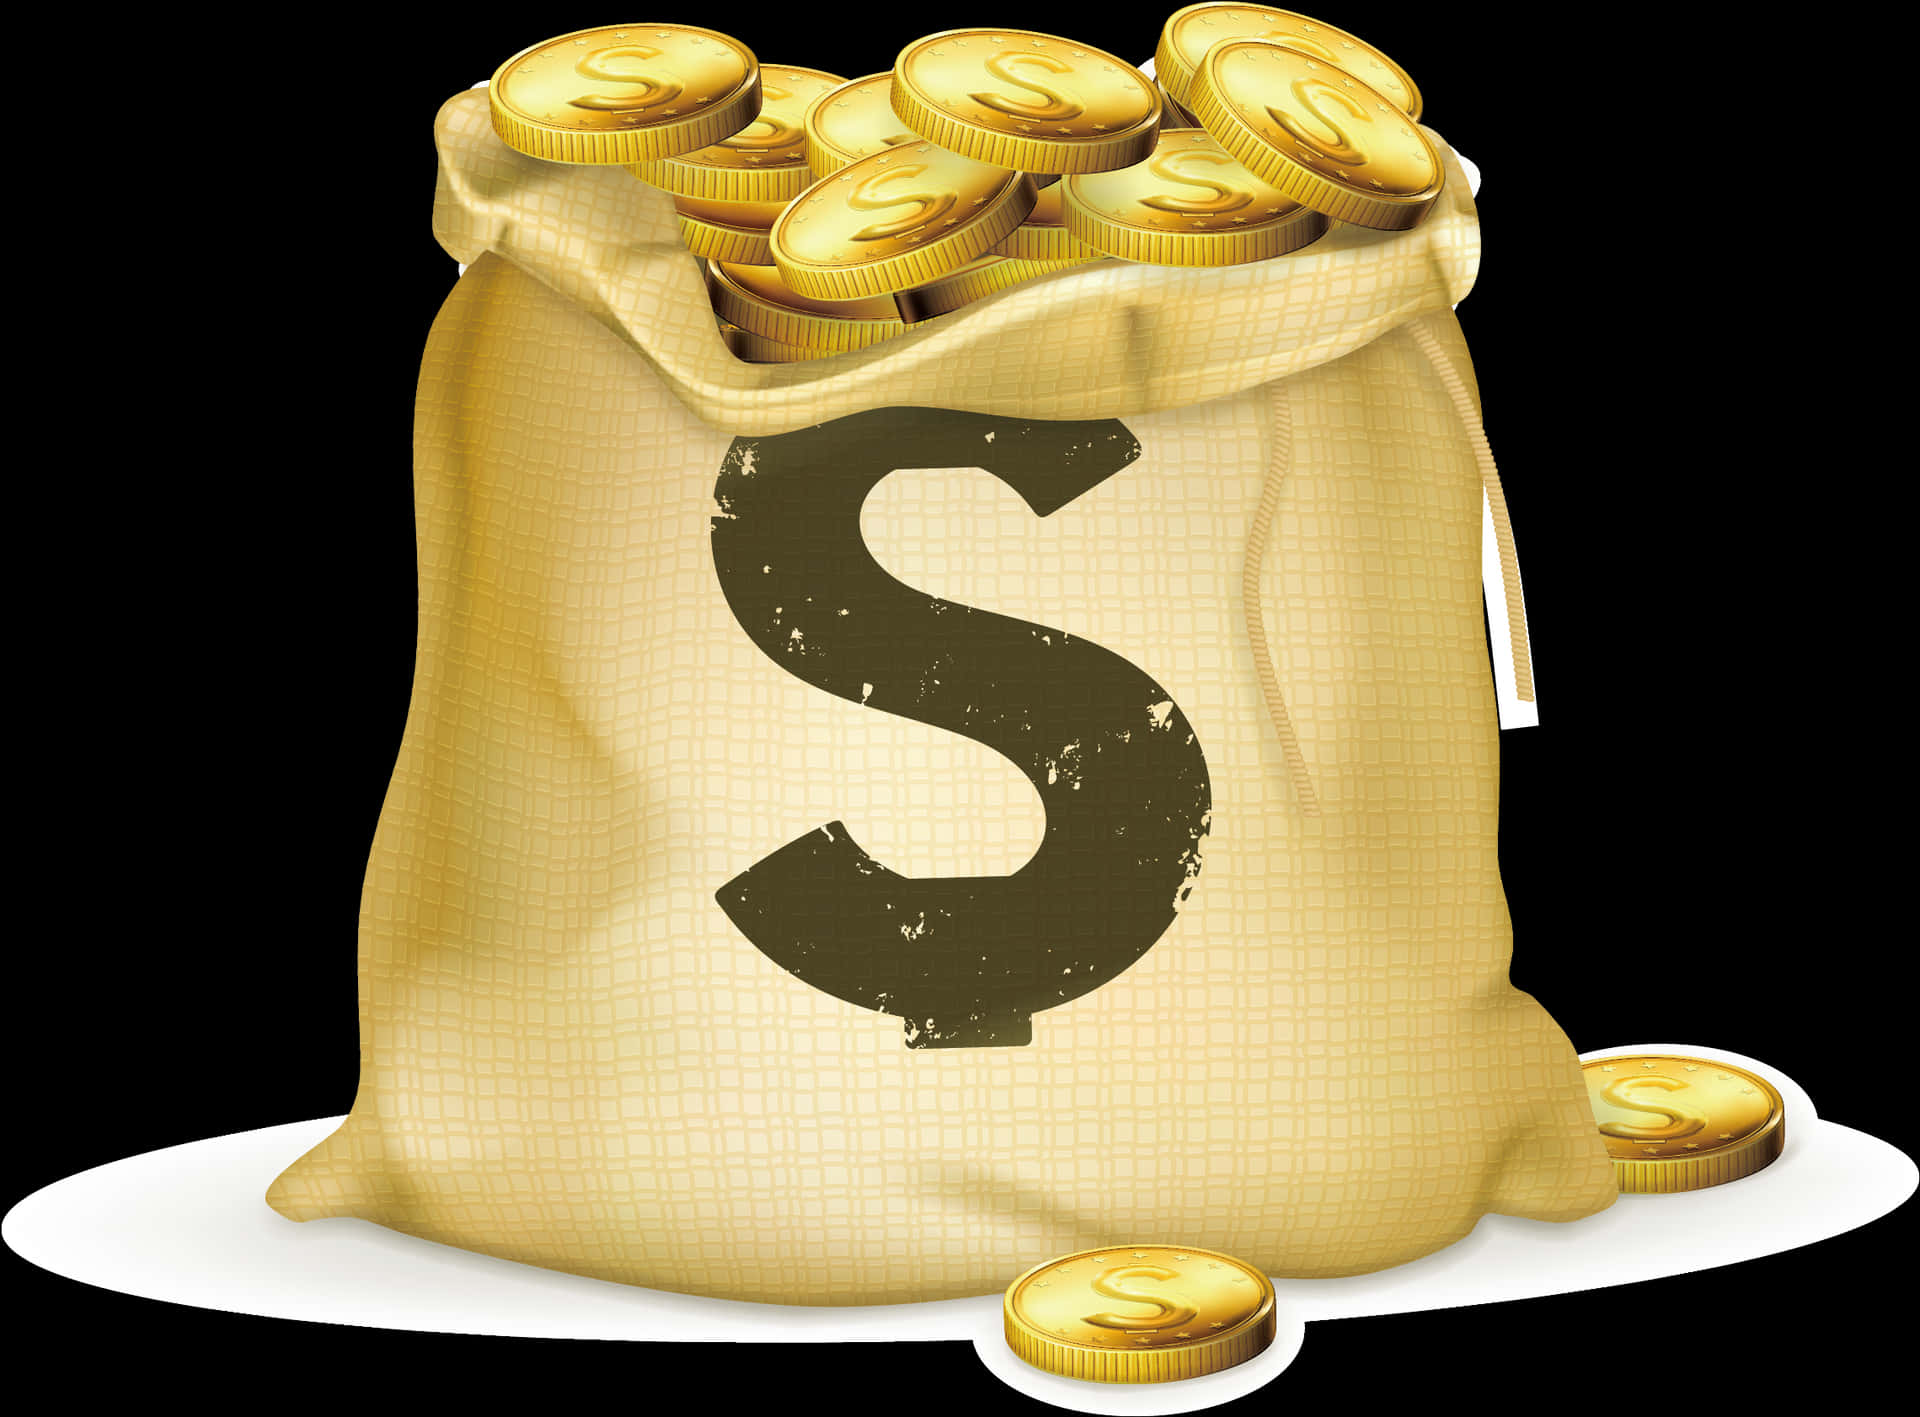 Money Bag Fullof Gold Coins PNG image